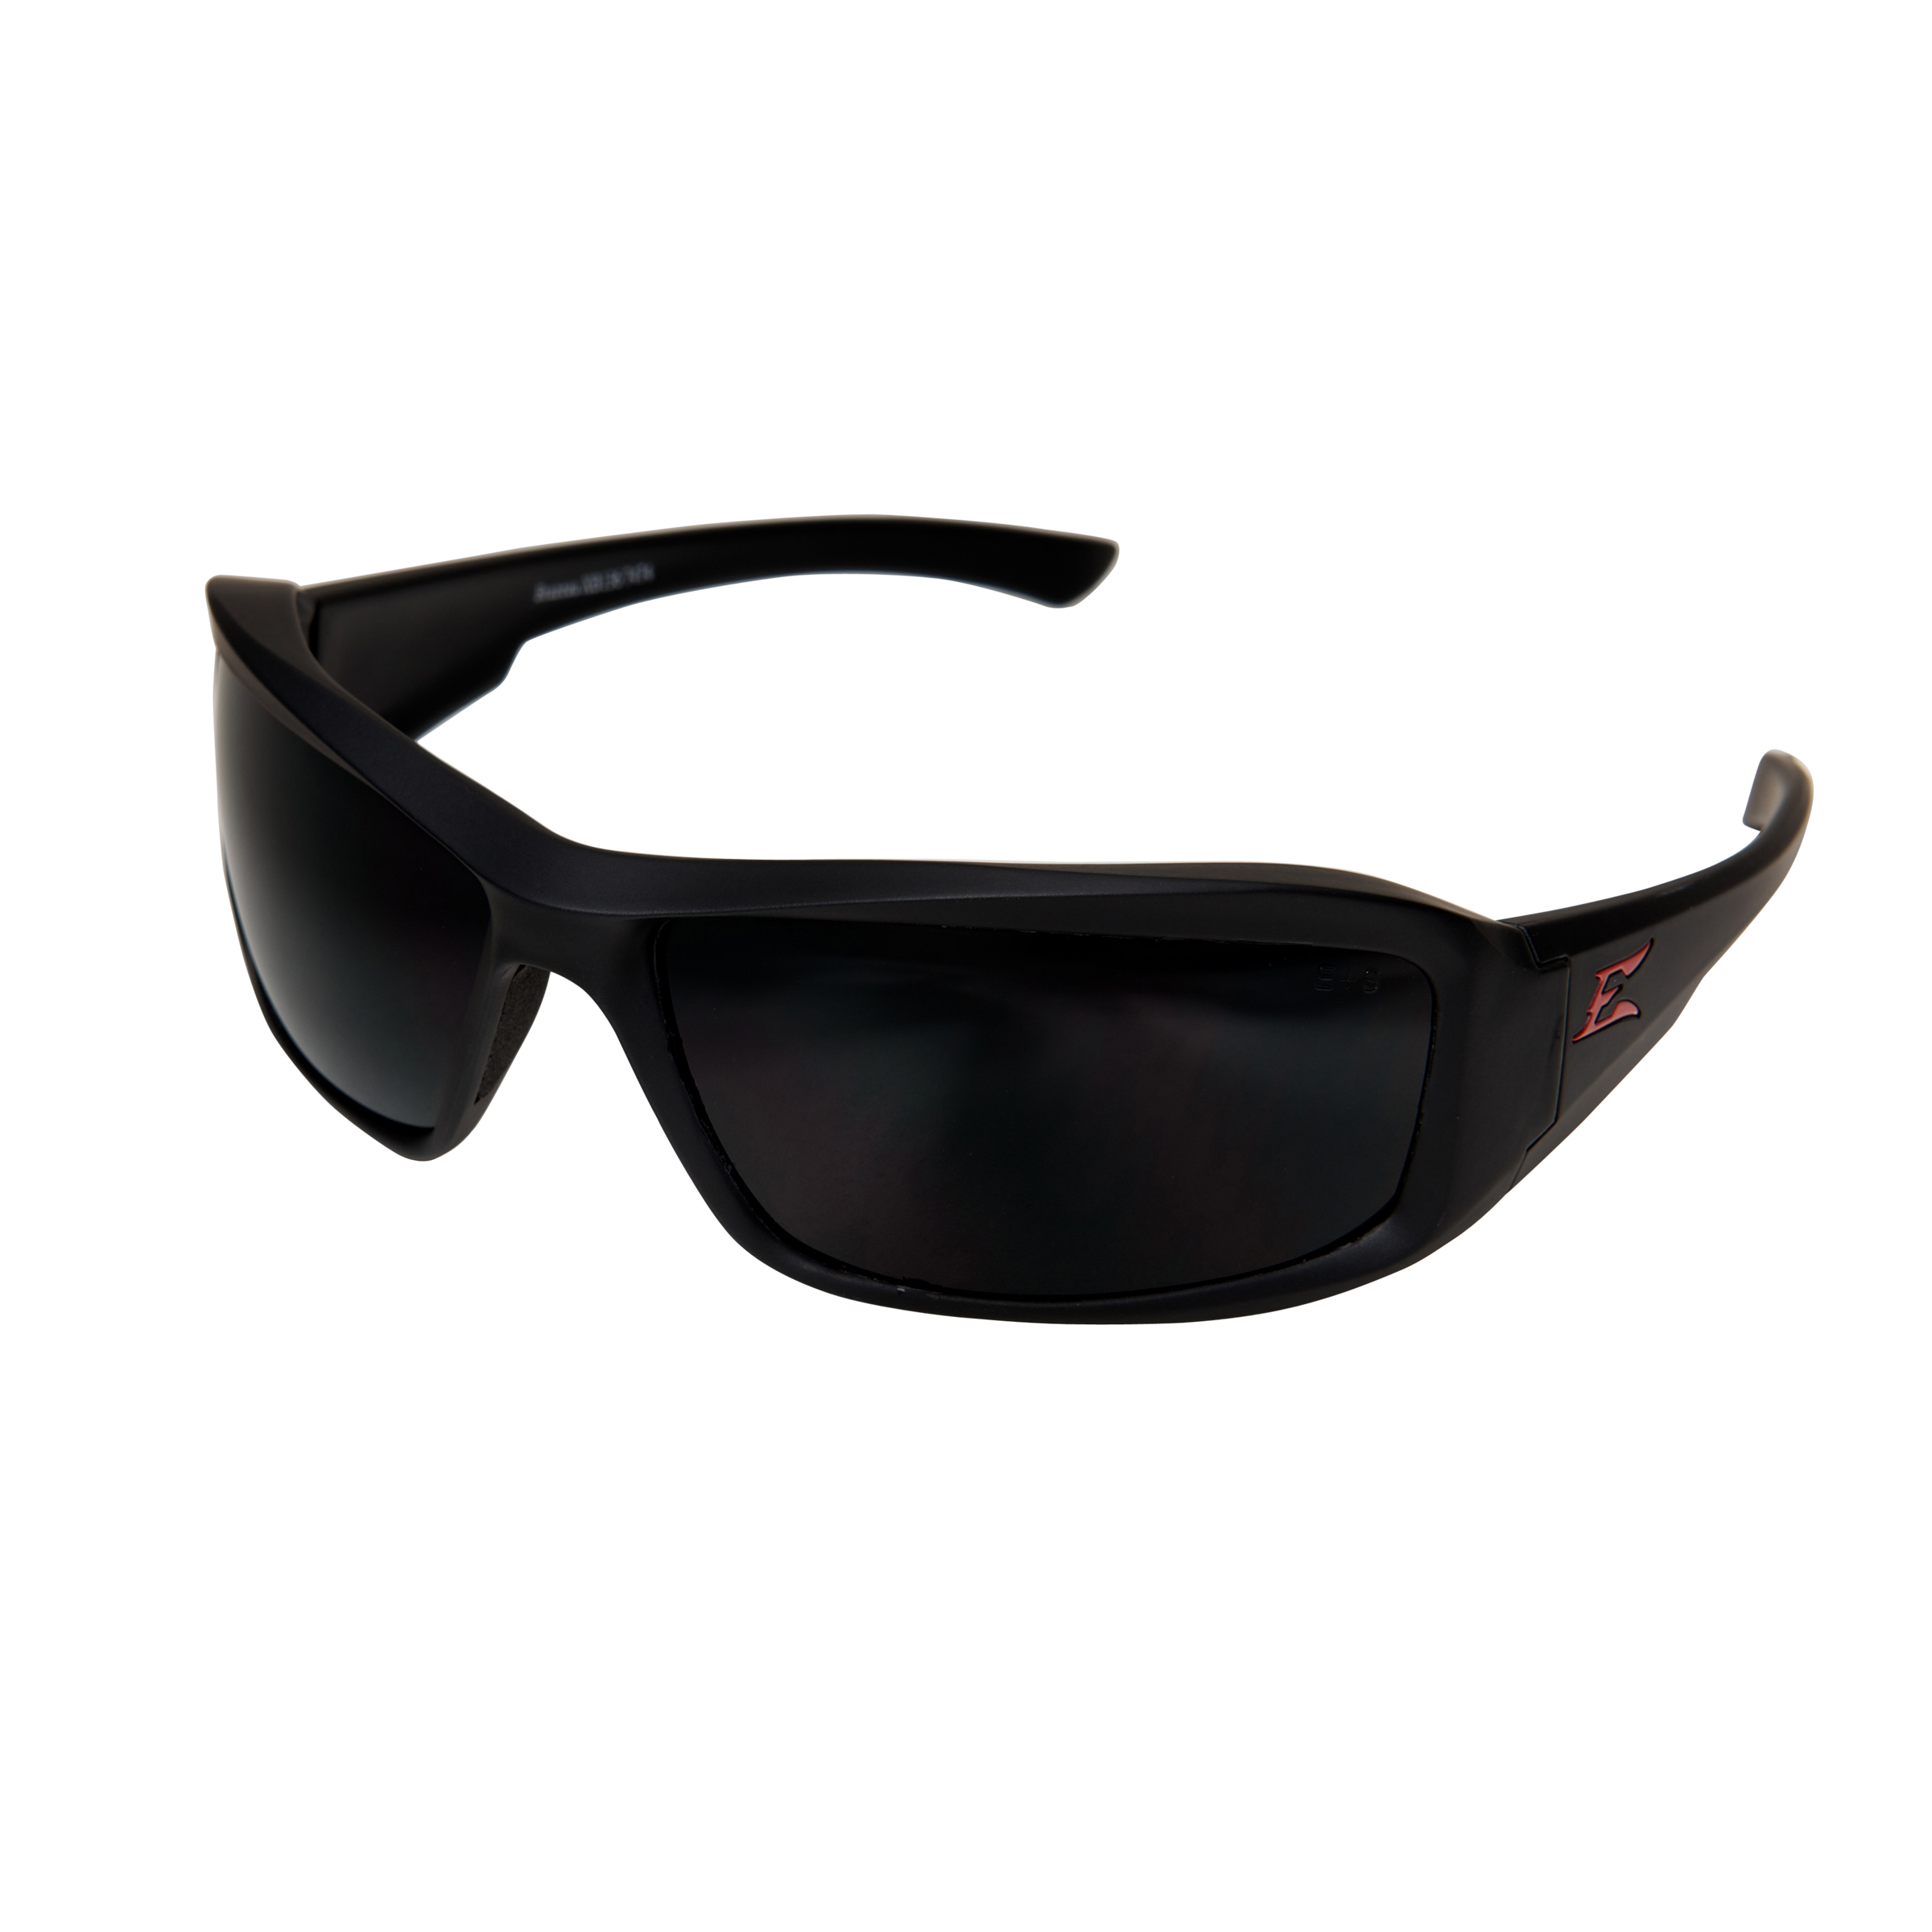 Brazeau TXB436VS  -  Safety Glasses Torque - Matte Black w/ Red "E" / Polarized with VaporShield